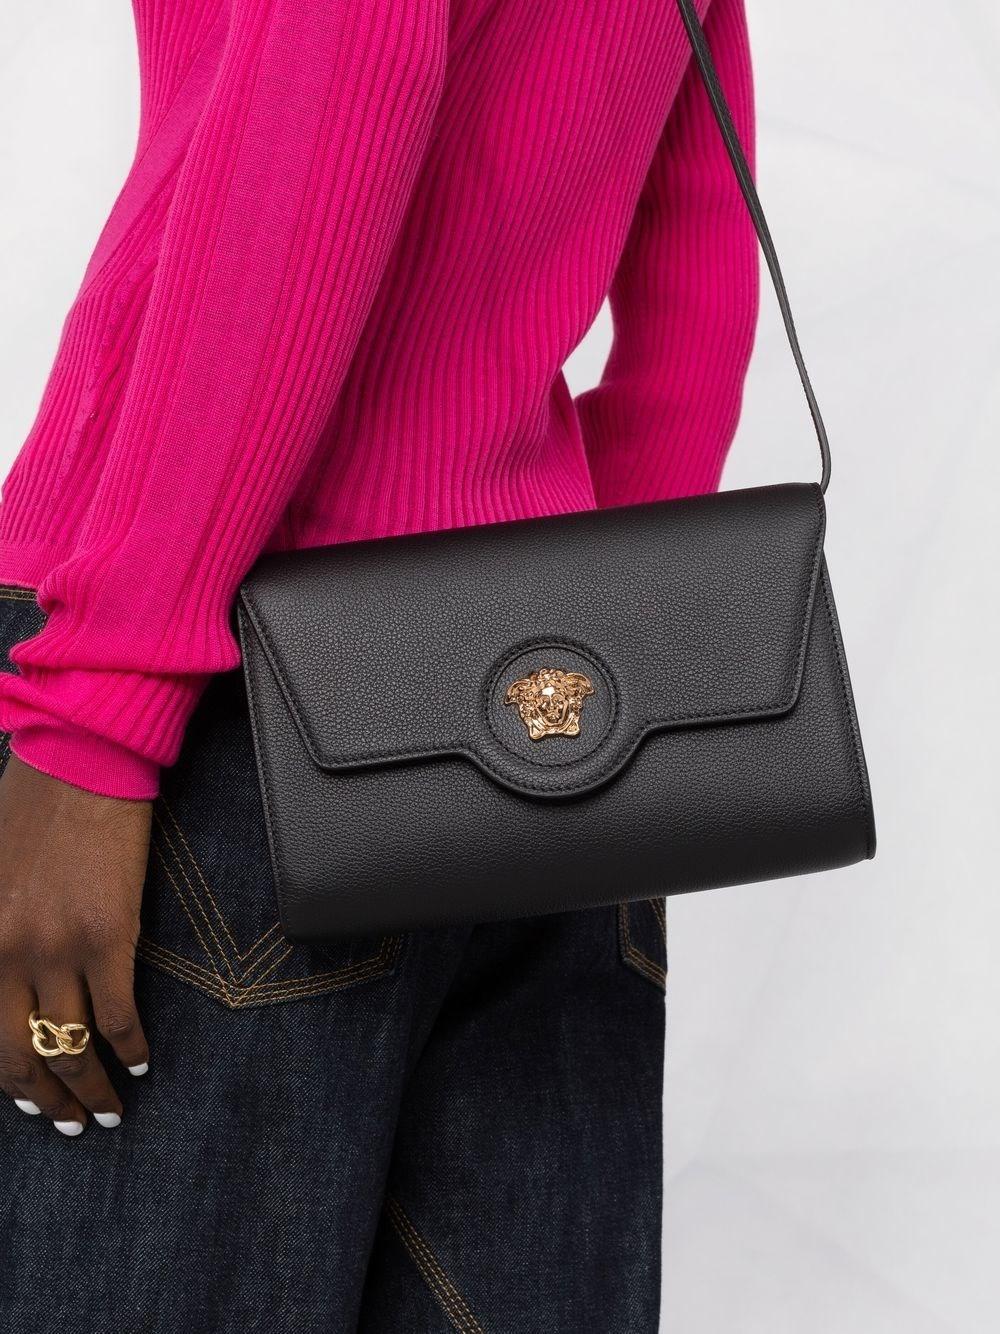 Versace Women's Black Medusa Textured Leather Crossbody Bag